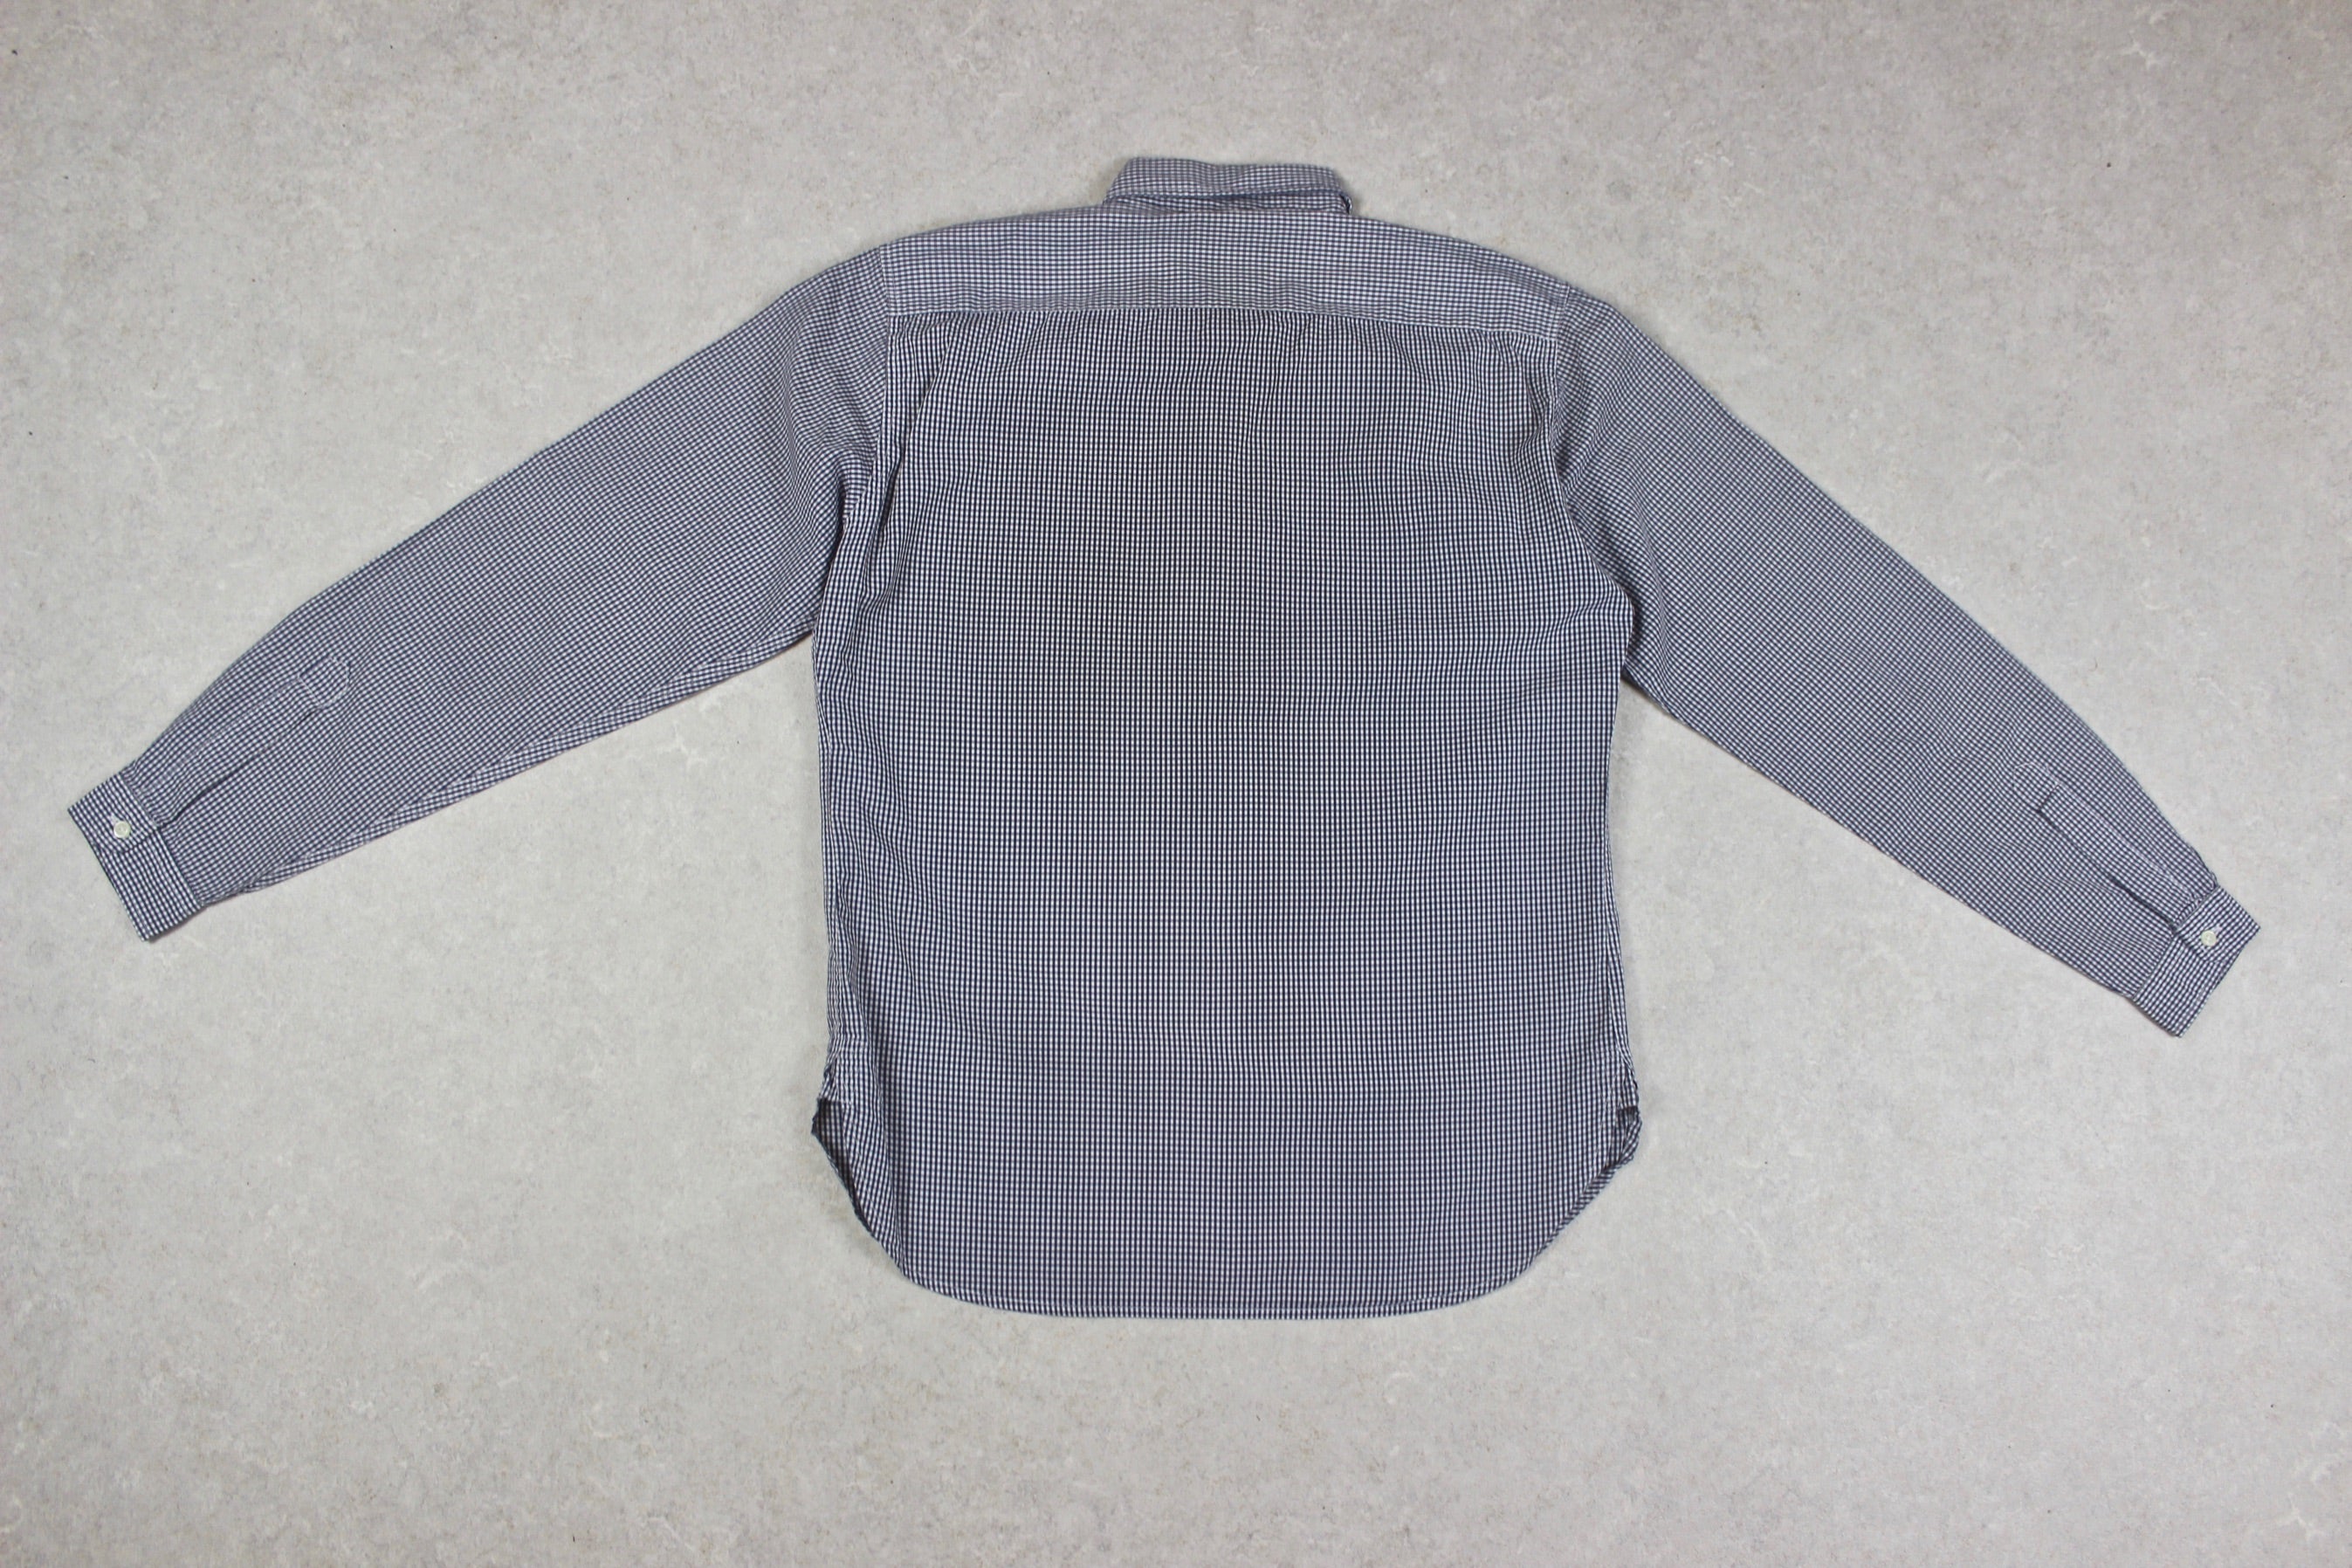 Oliver Spencer - Shirt - Navy Blue/White Gingham Check - 14.5/Extra Small